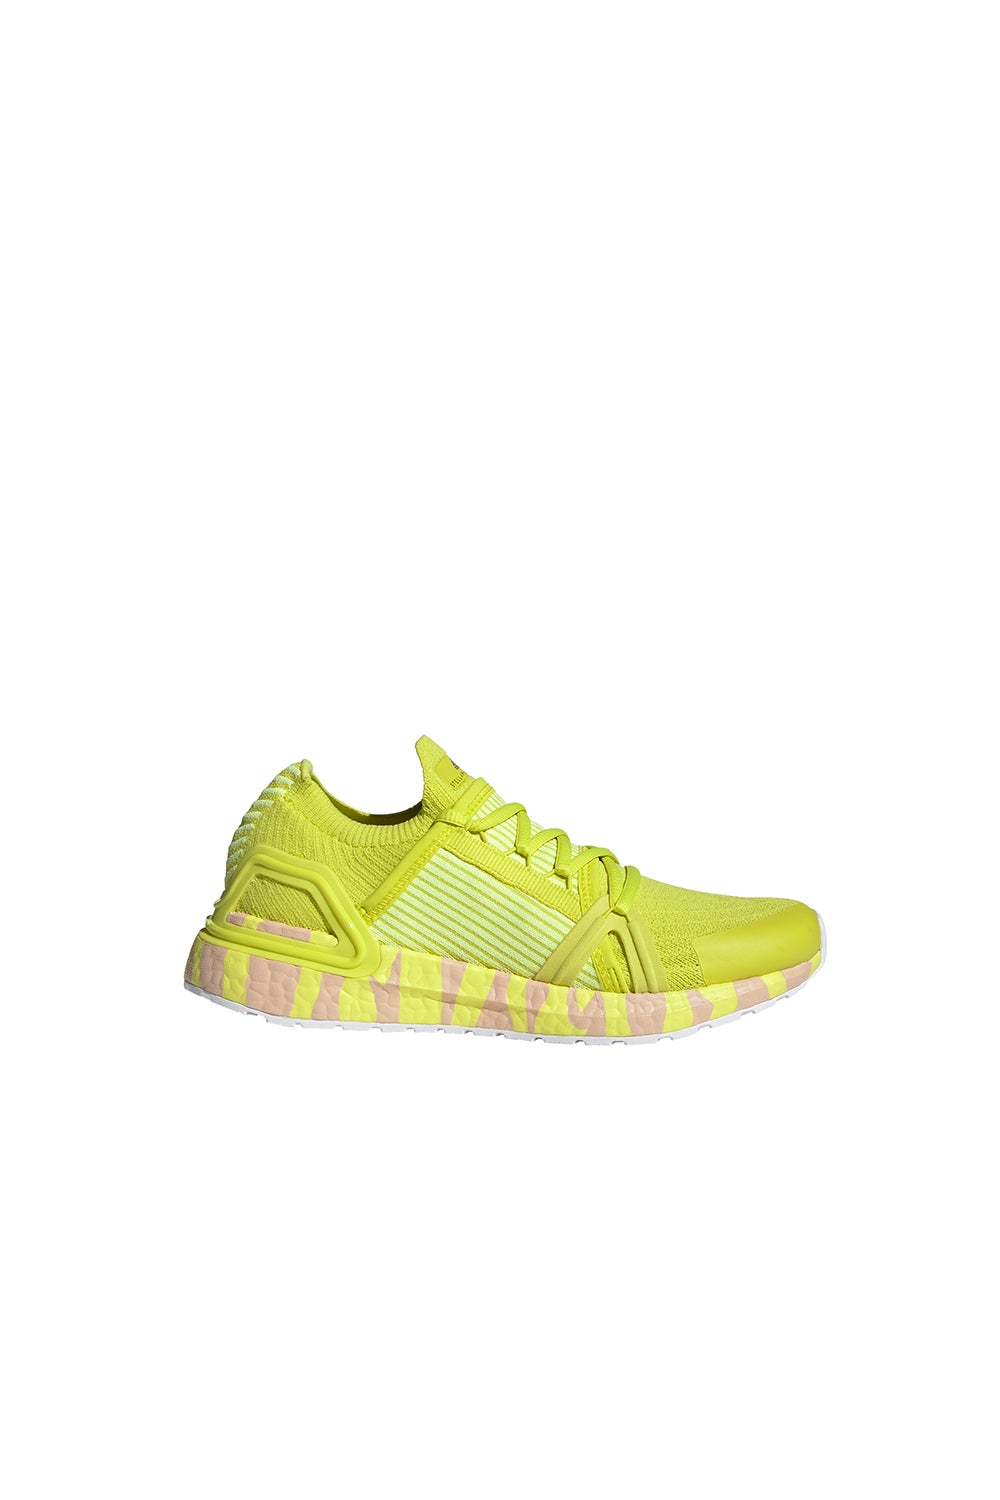 adidas by Stella McCartney UltraBOOST 20 Shoes Acid Yellow | Karen Walker